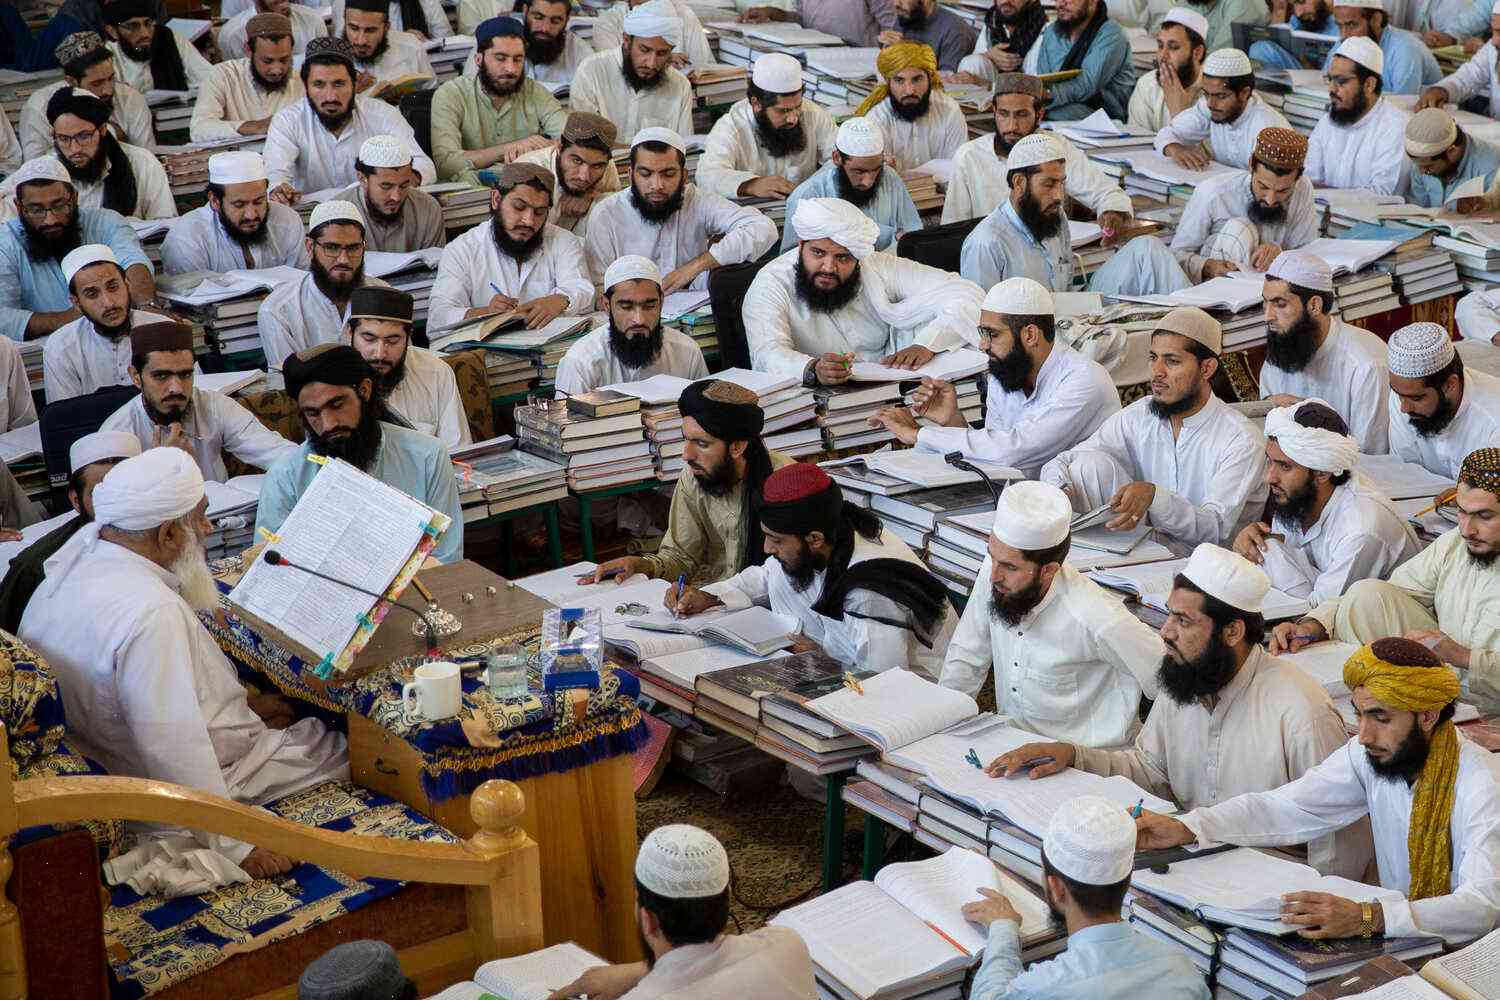 'Pakistan's Taliban school' explored in India documentary